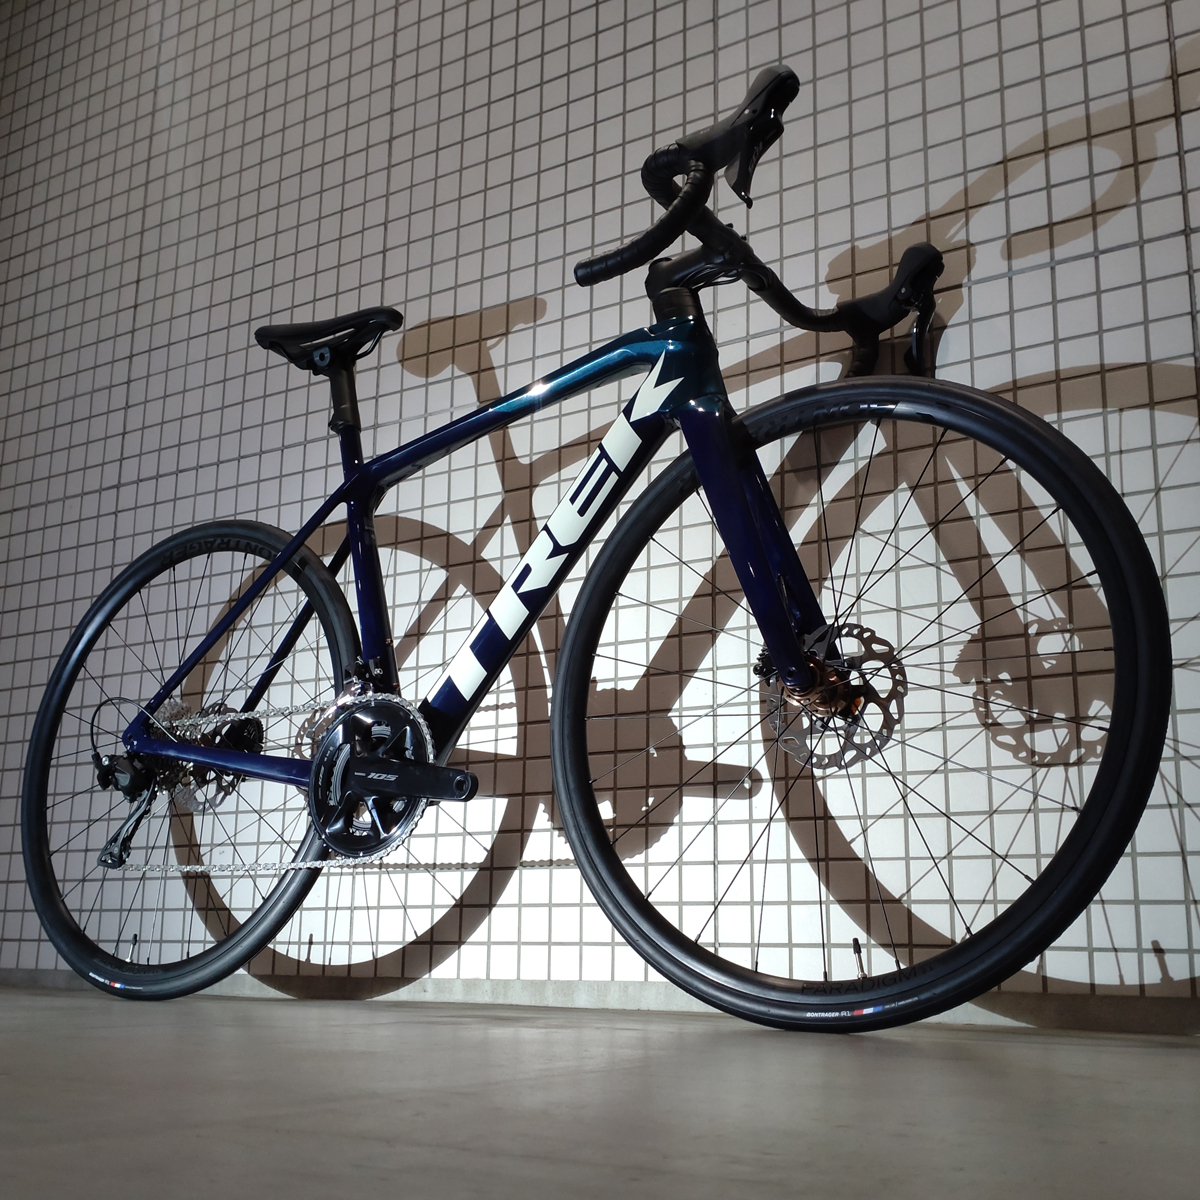 【TREK】24年モデル 新型105搭載 軽量+エアロなEMONDA SL5入荷 | 川崎で自転車をお探しならY's Road 川崎店